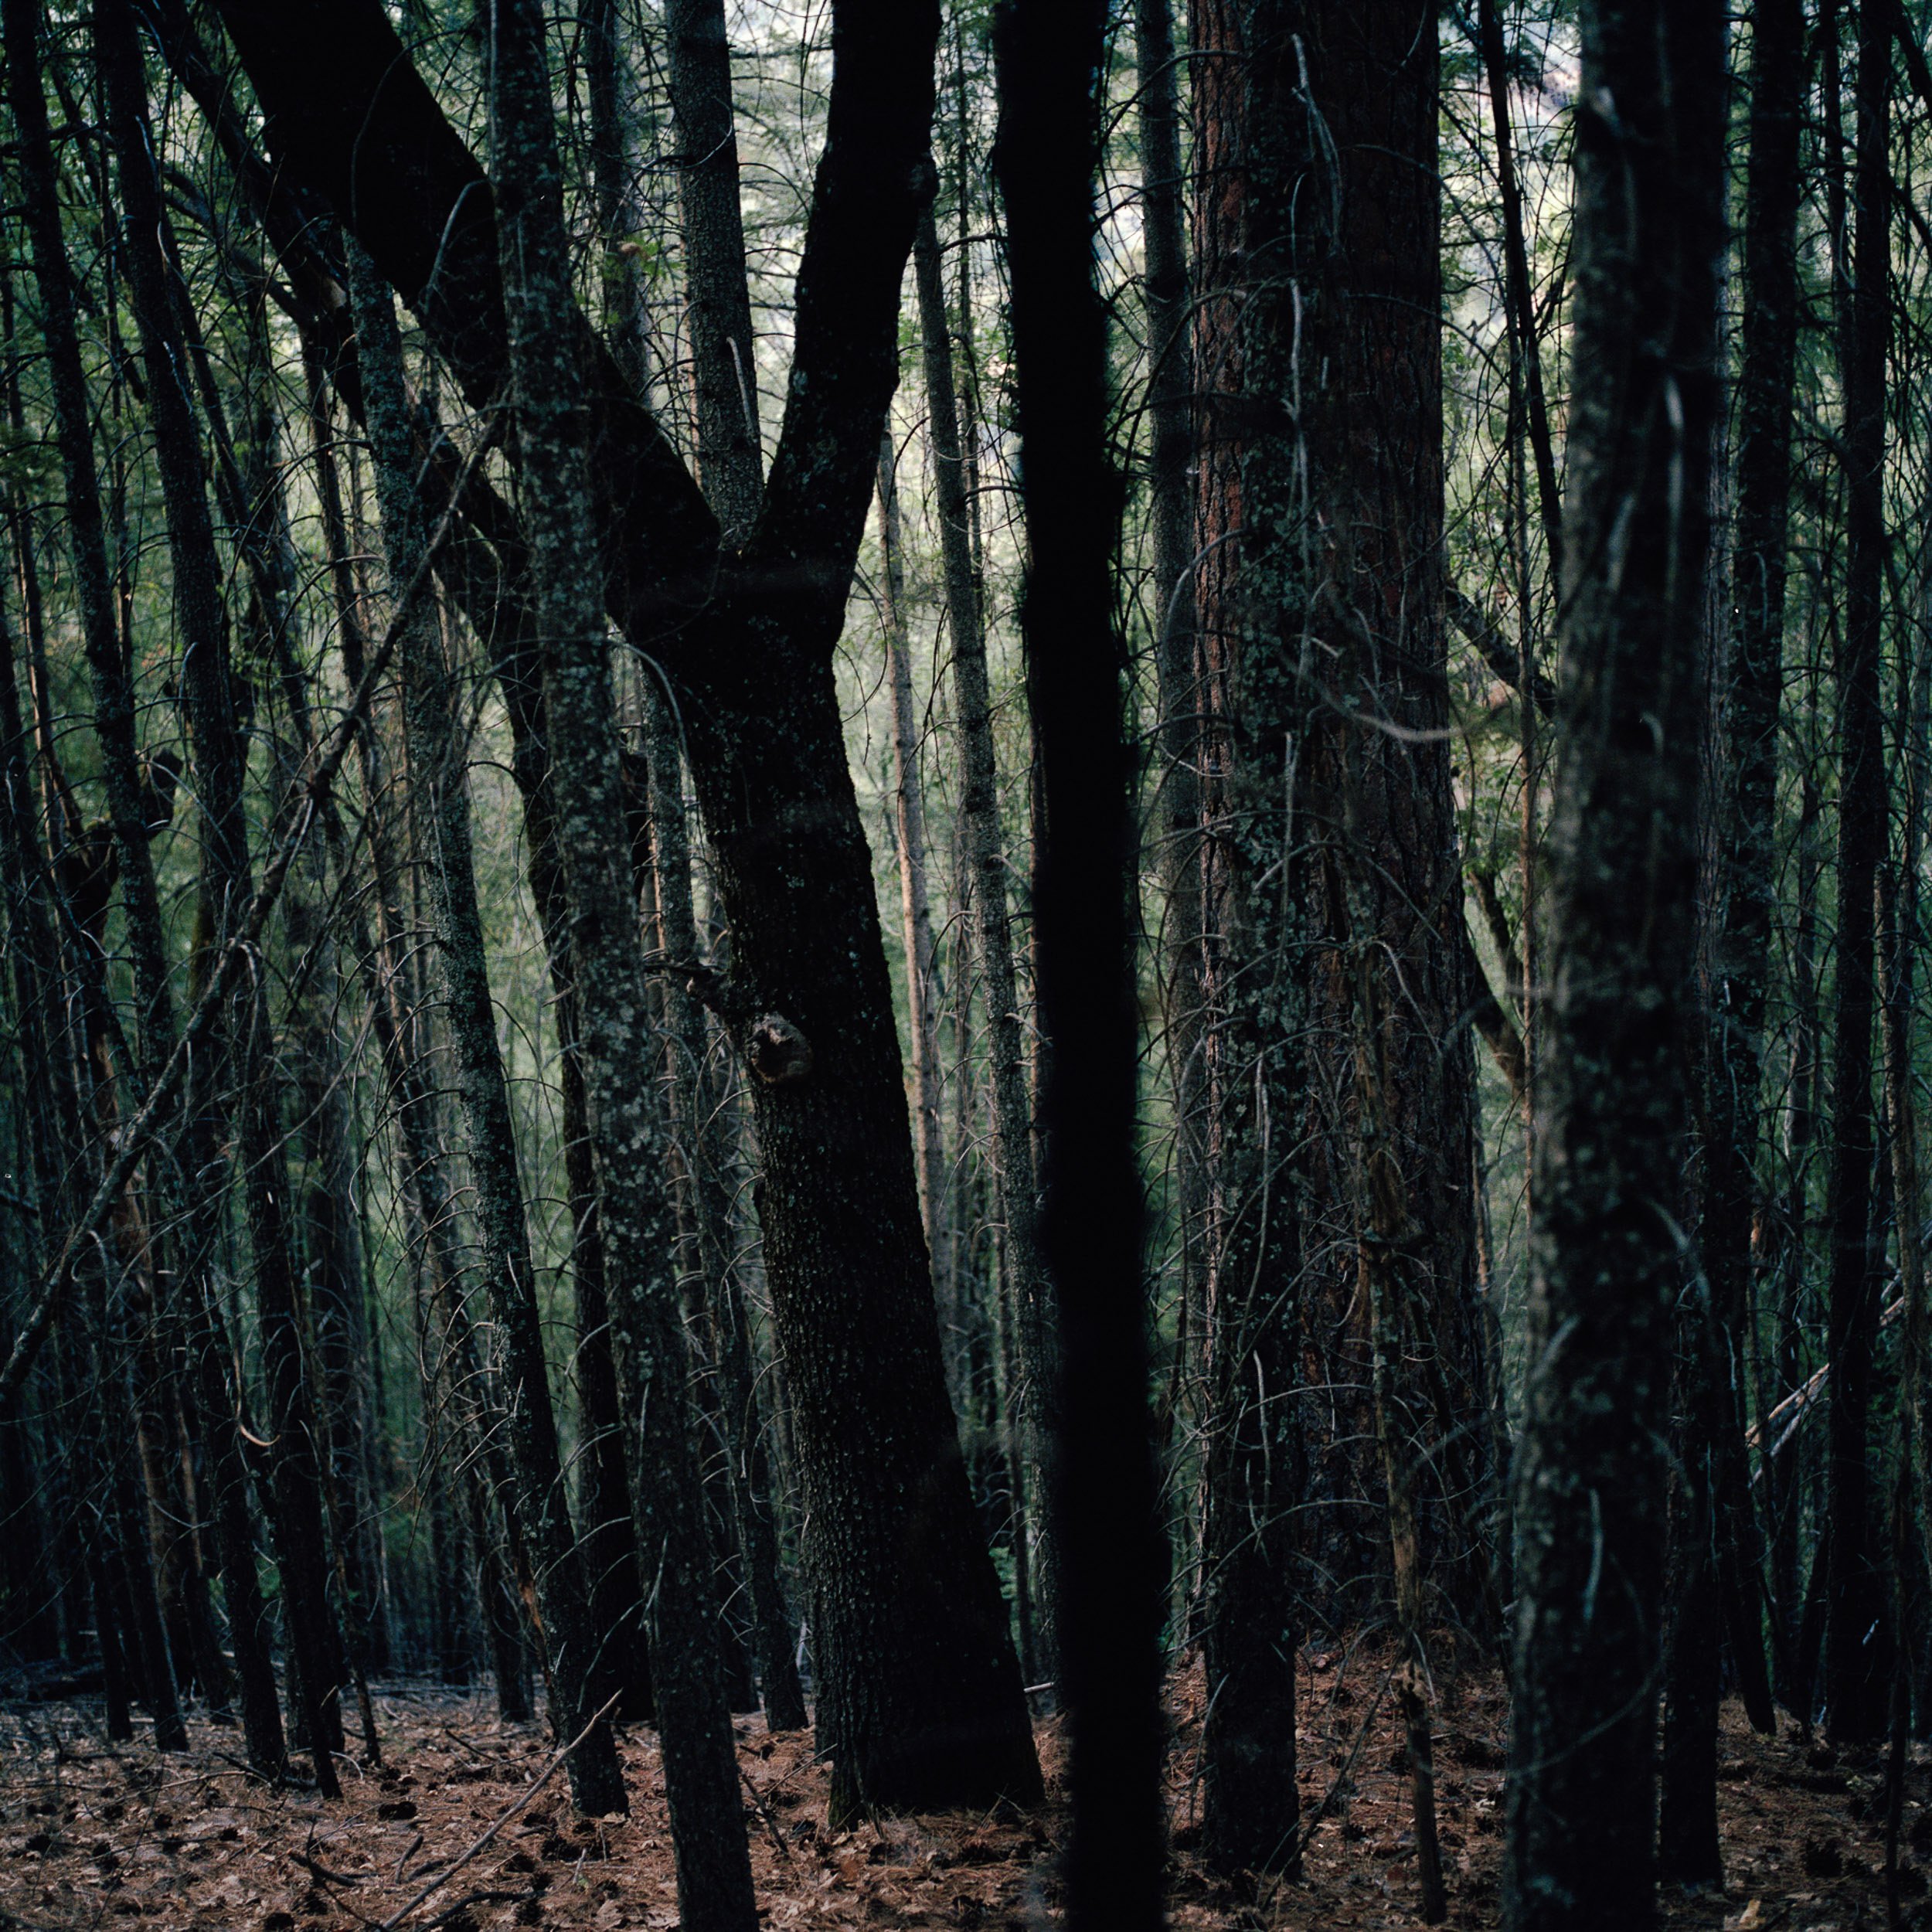   Oak Among Firs, Stanislaus National Forest  